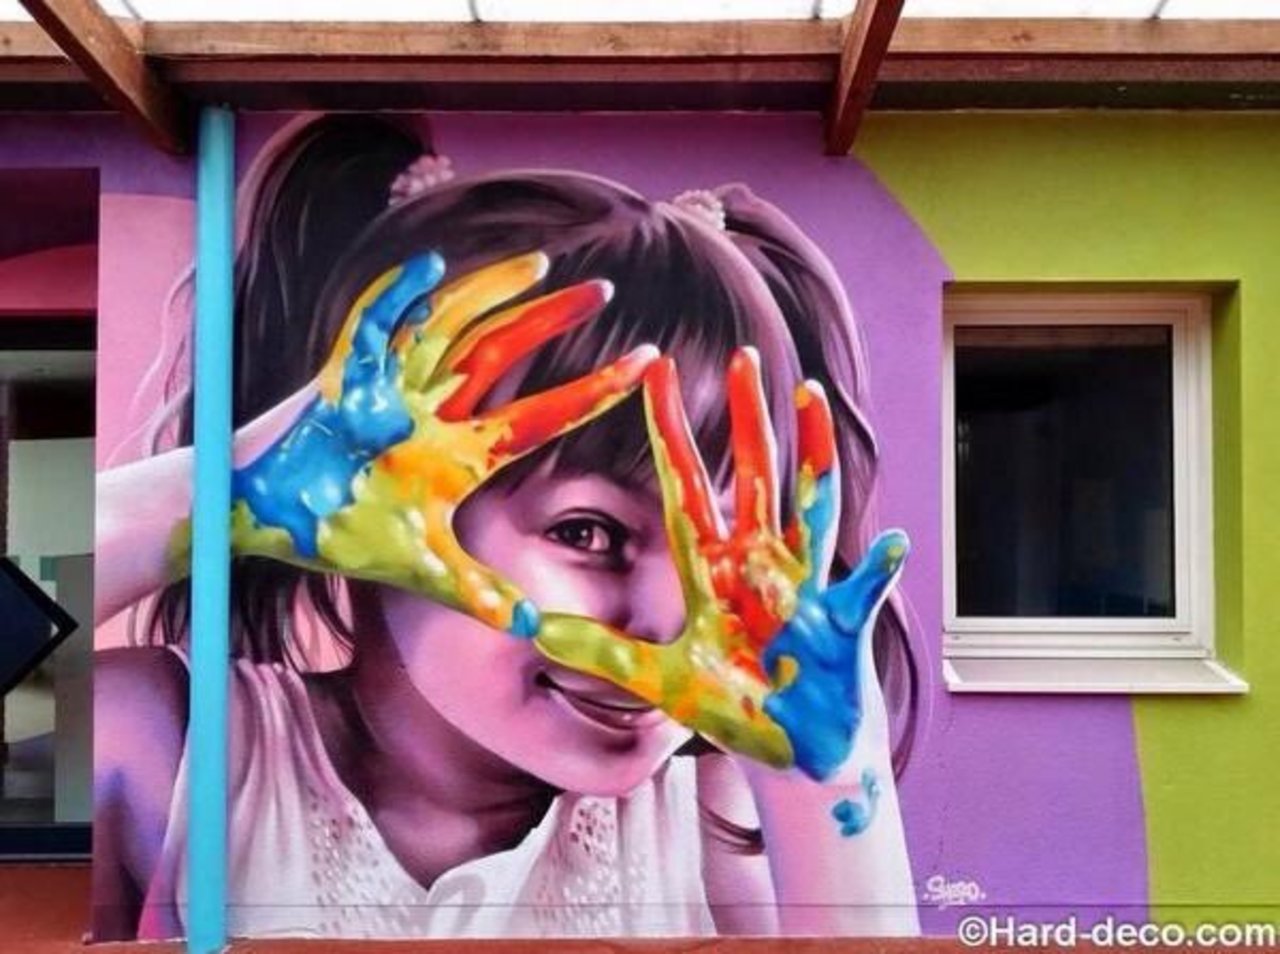 #mural by Hard Deco #Paris #France #streetart #urbanart #art #graffiti https://t.co/qLX01U7BdG